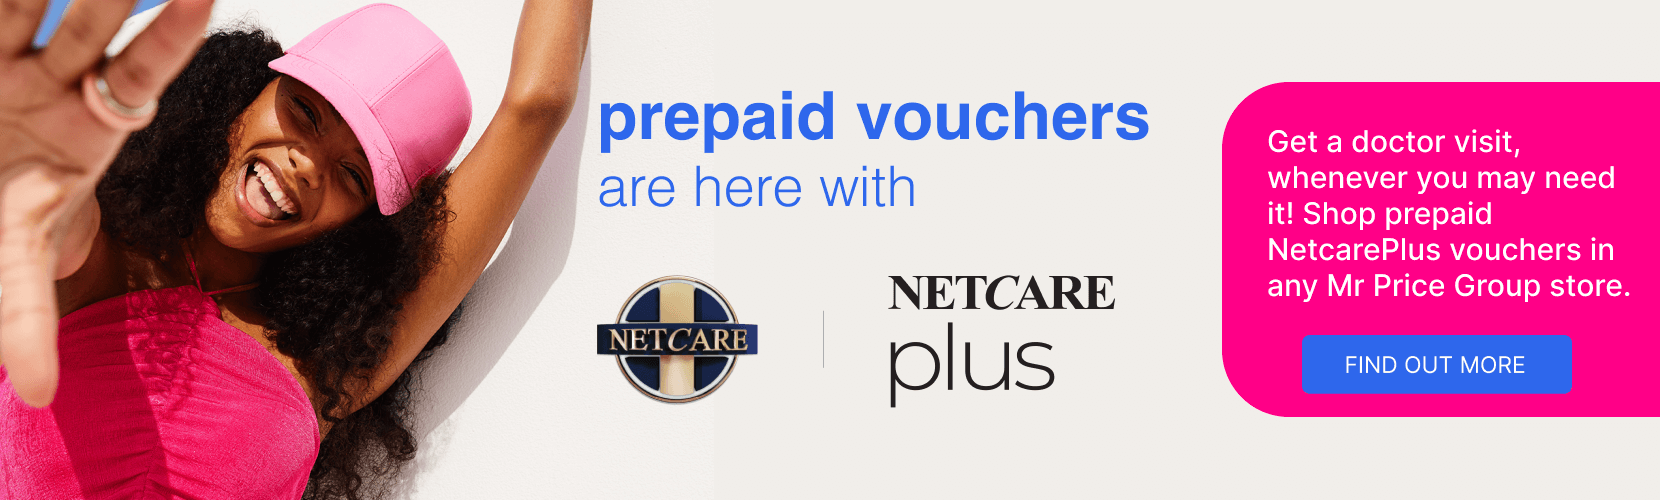 Mr Price Money Netcare Plus Prepaid GP/Doctor Vouchers